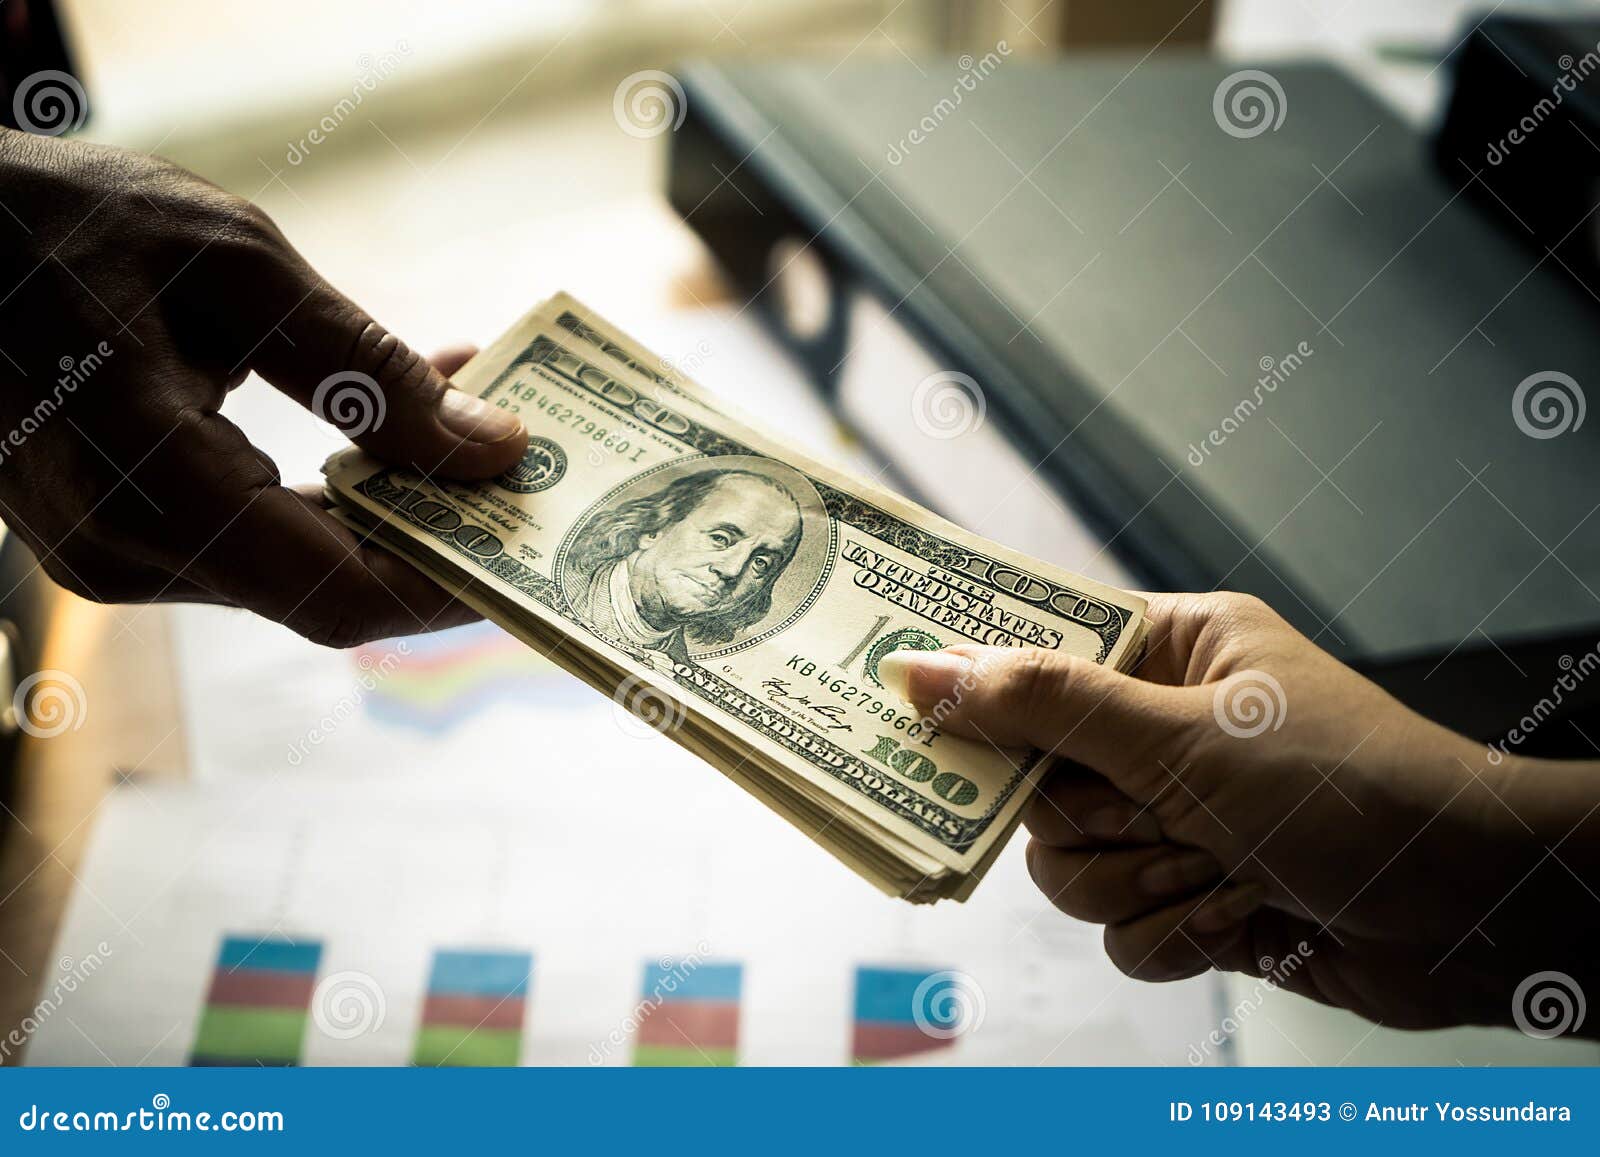 business man hands handing money over business meeting